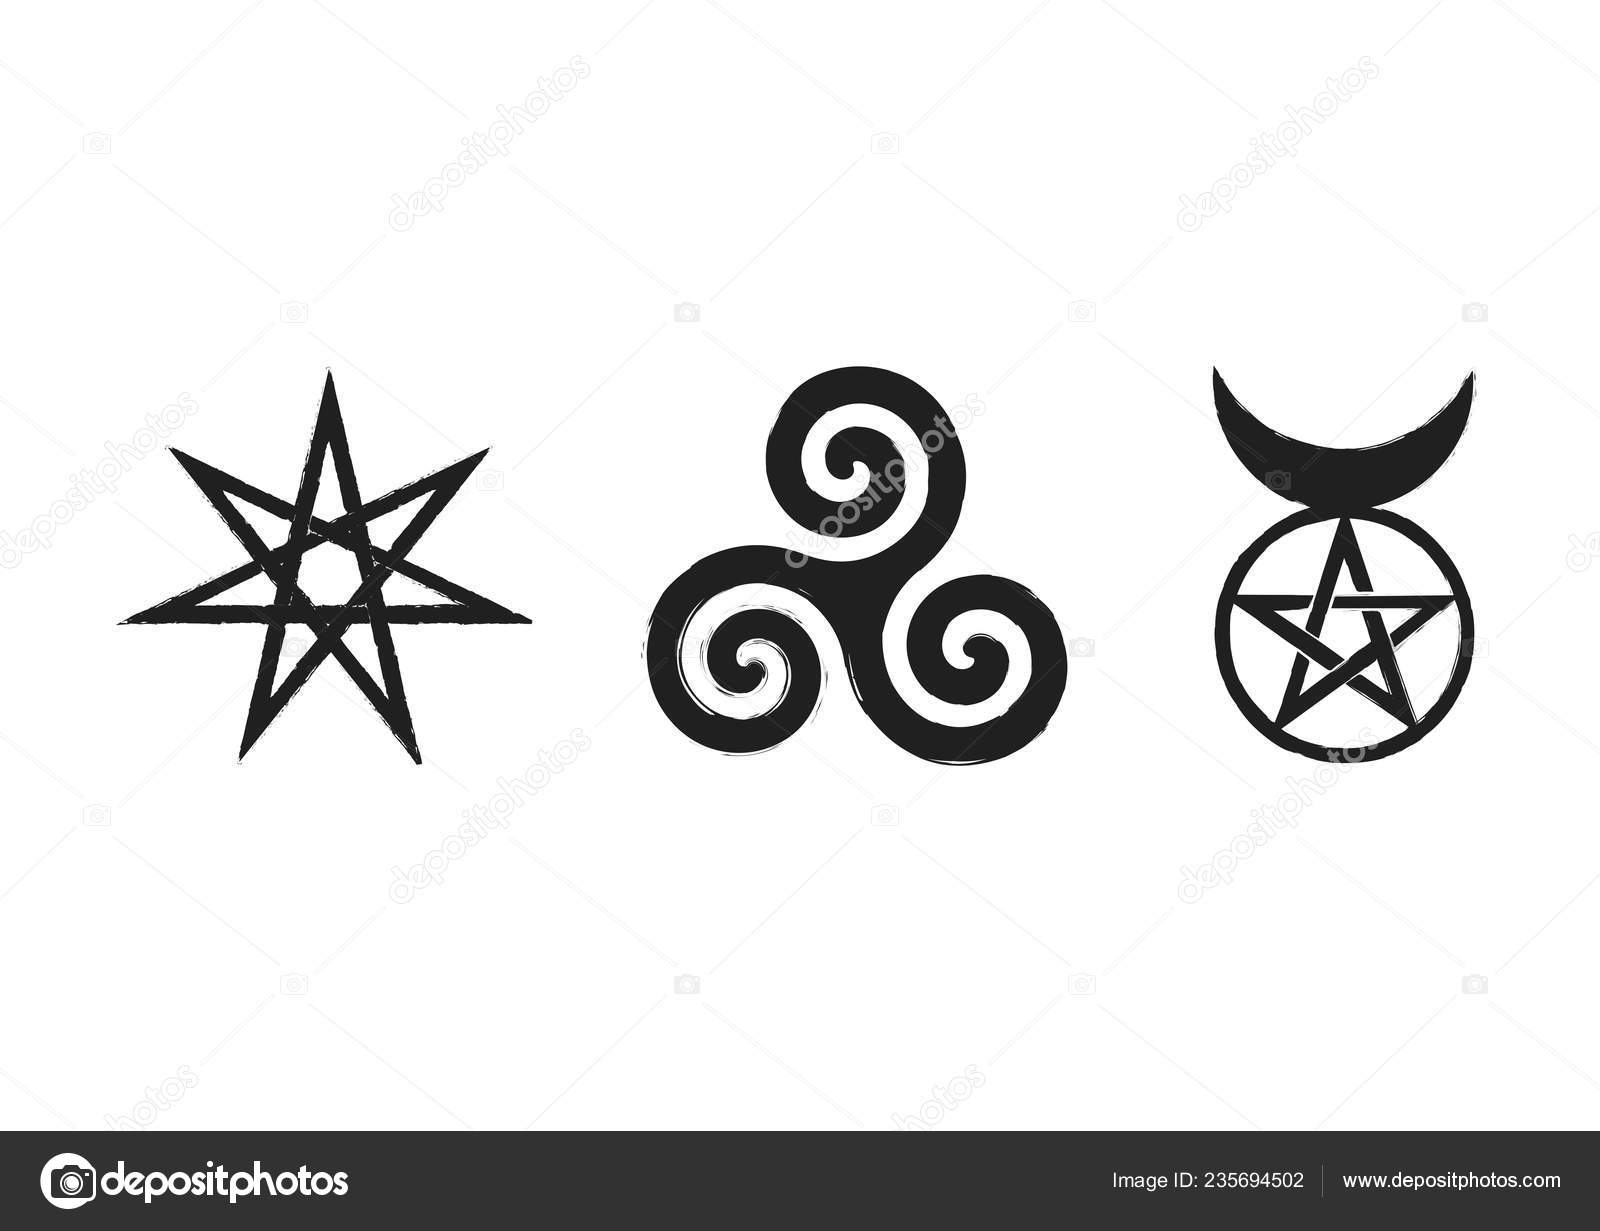 deadly sins ancient symbols